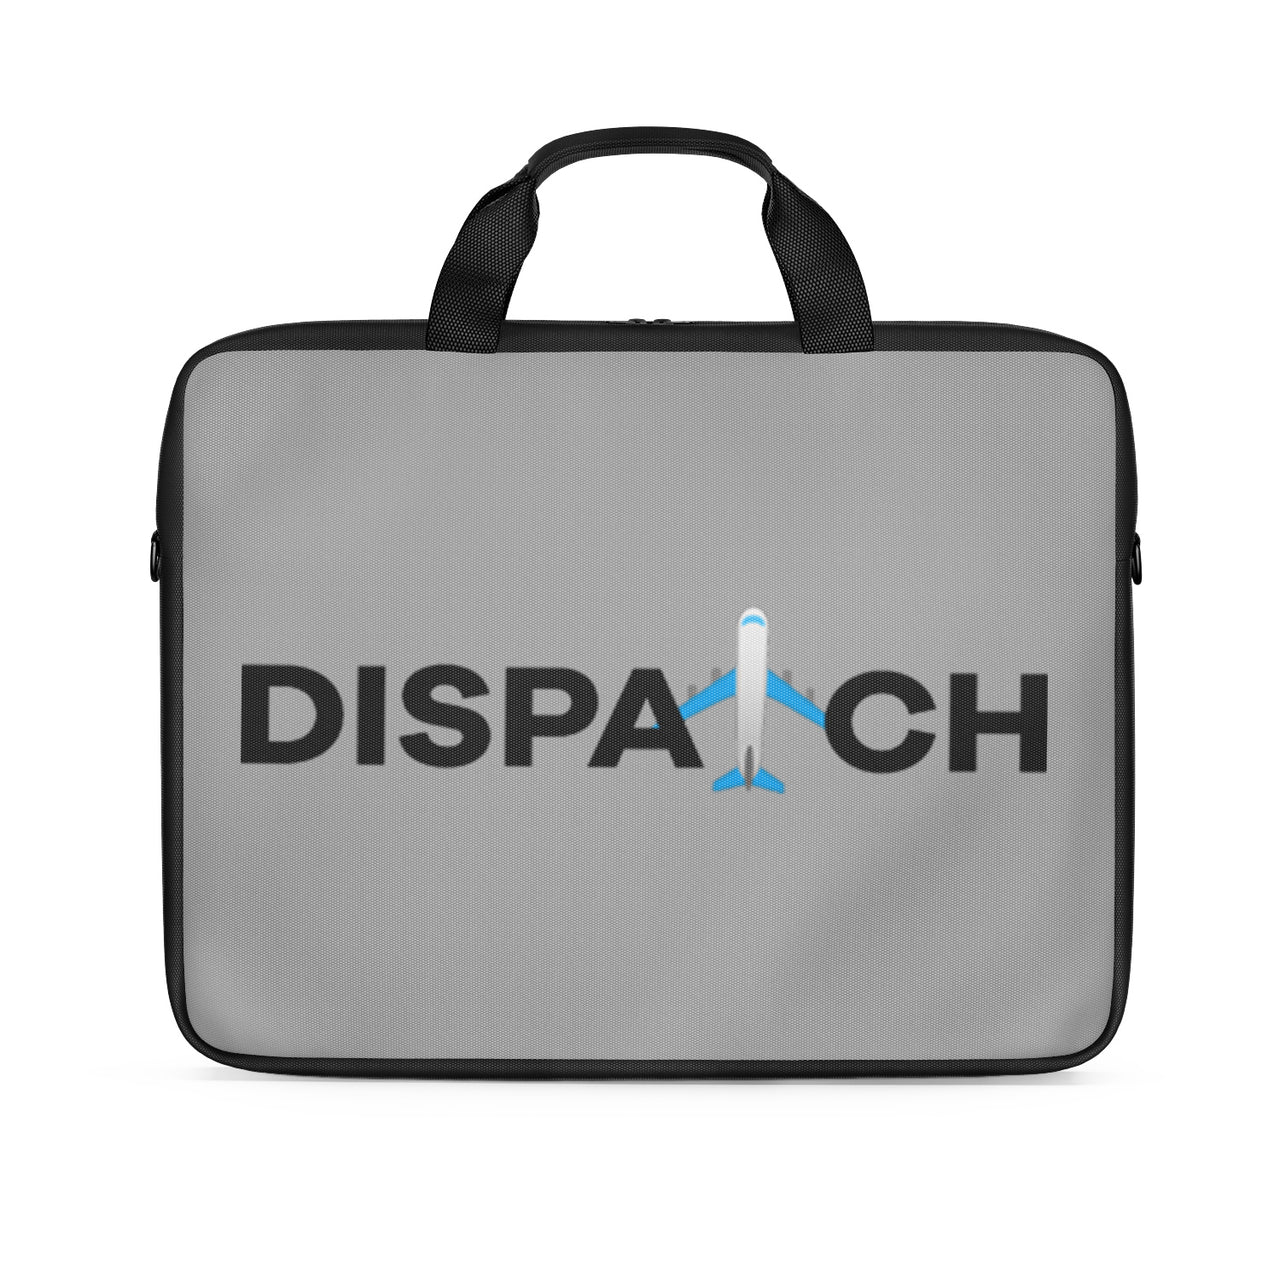 Dispatch Designed Laptop & Tablet Bags